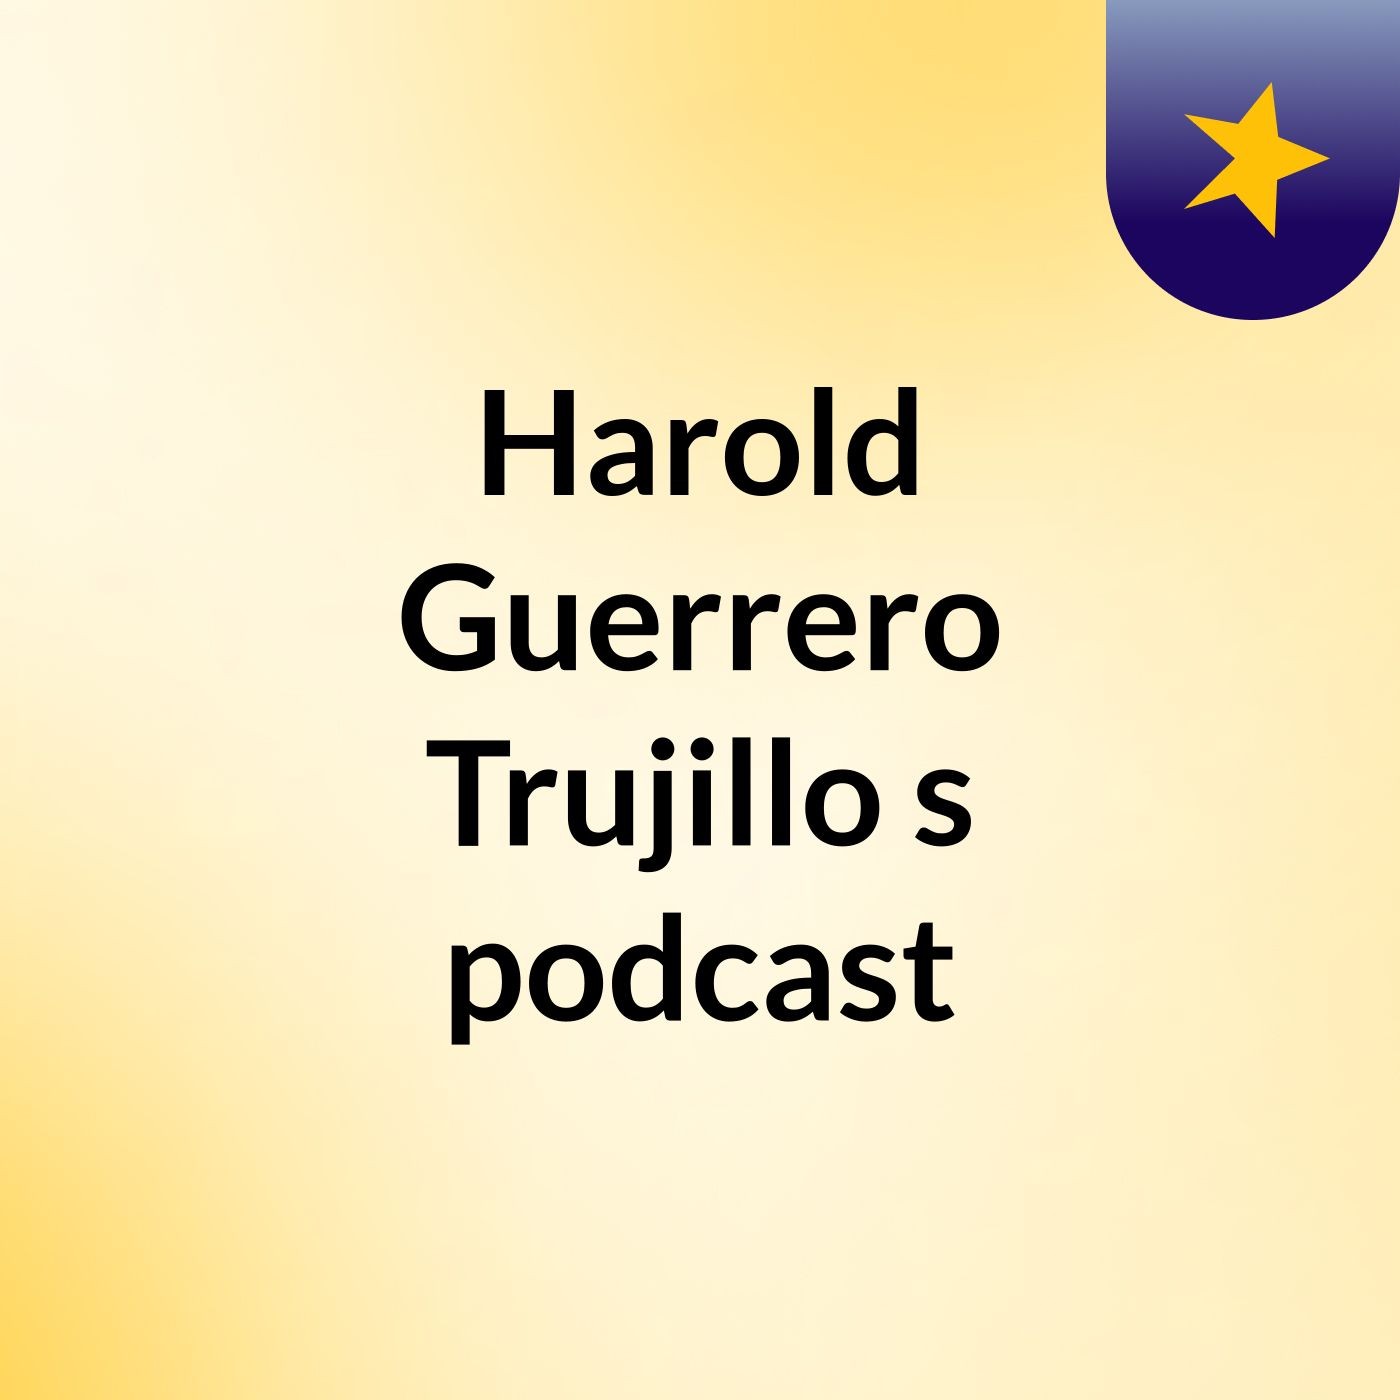 Harold Guerrero Trujillo's podcast